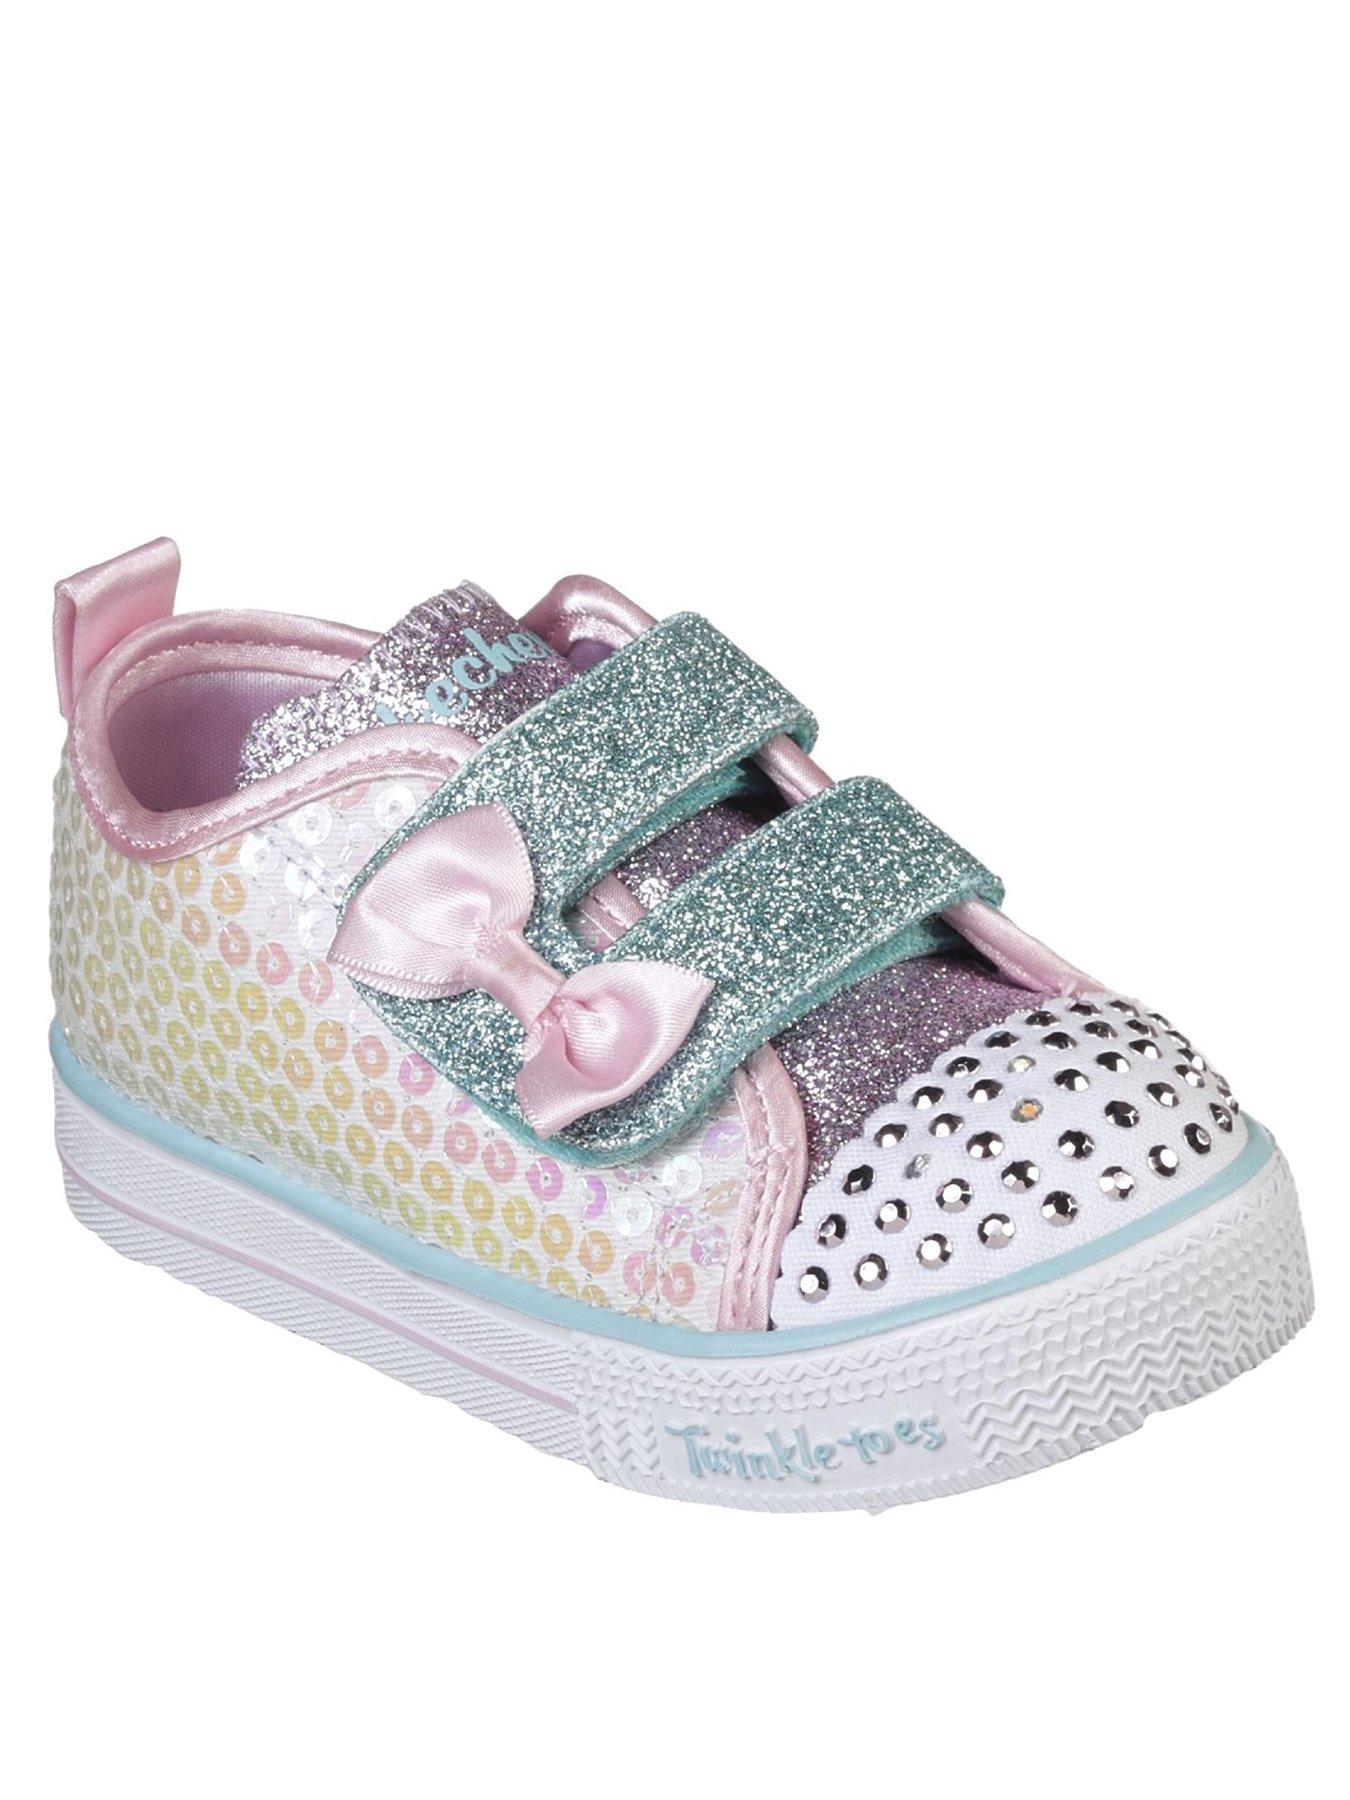 skechers infant shoes size 4